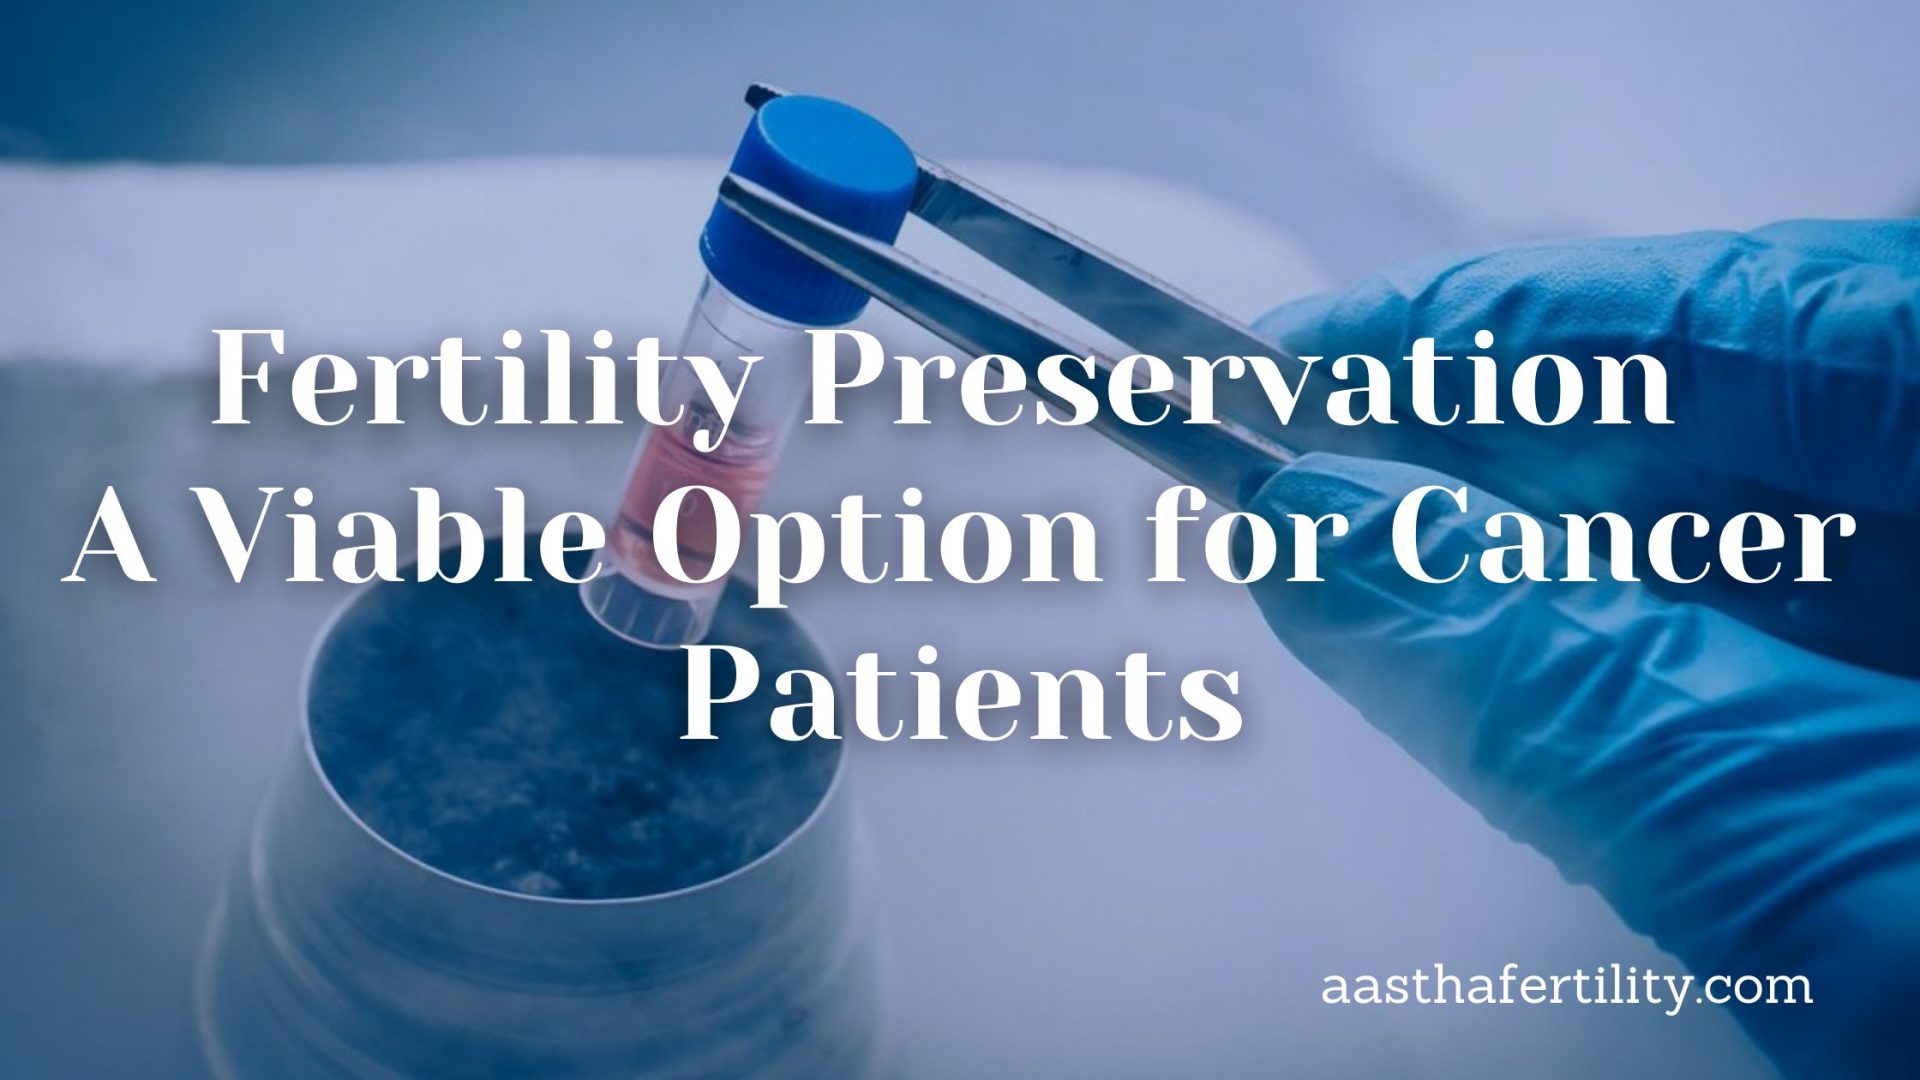 Fertility Preservation A Viable Option for Cancer Patients